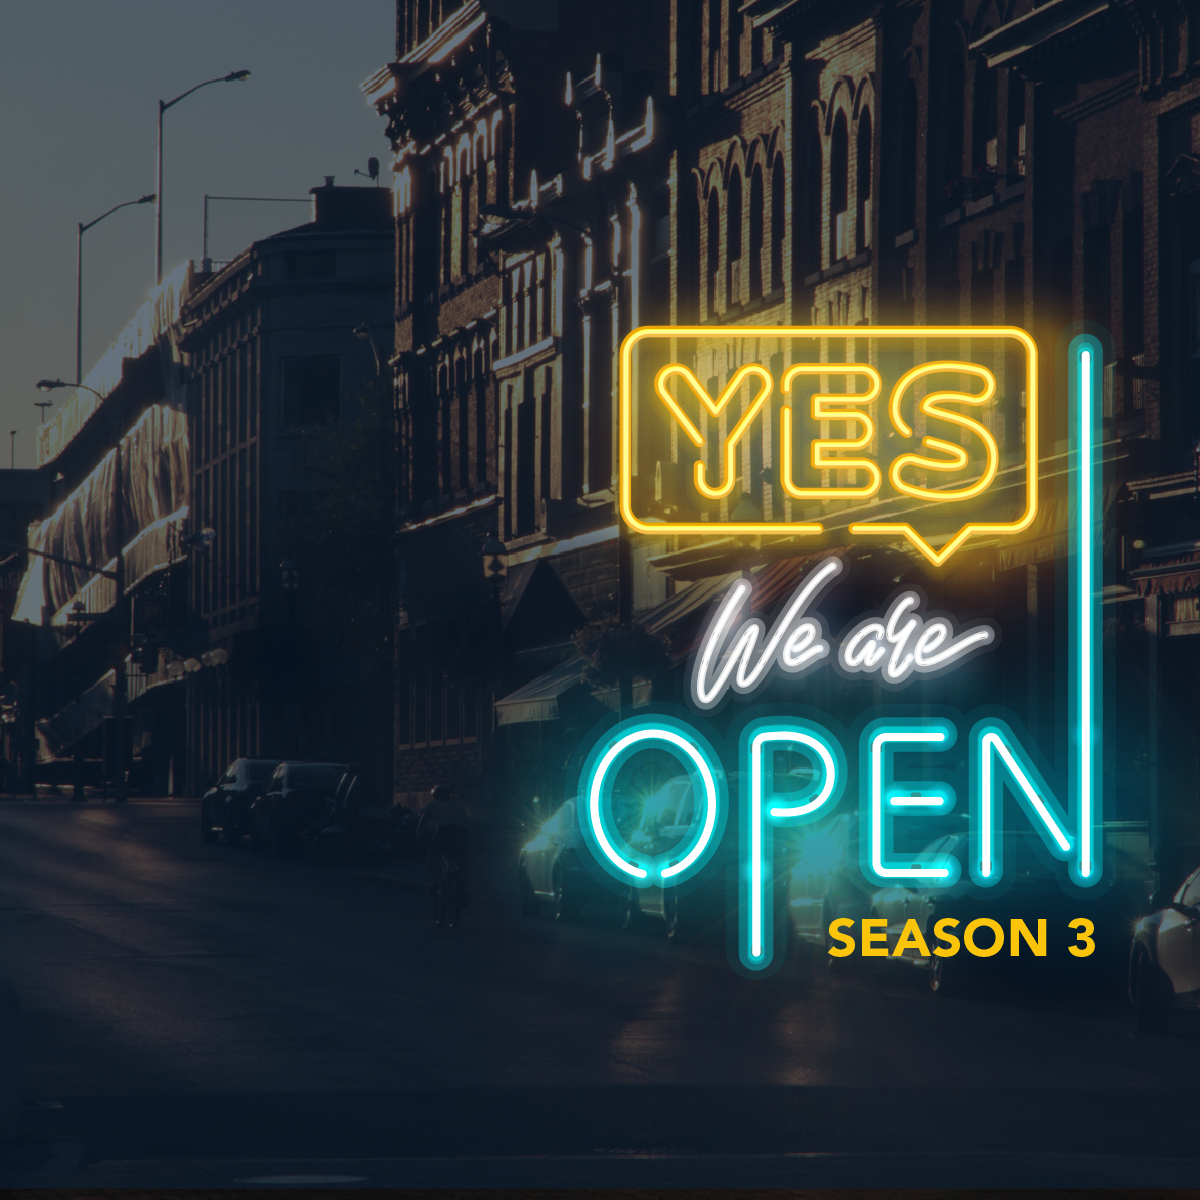 StylePhotos - "Yes, We Are Open" Season 3 Episode 4